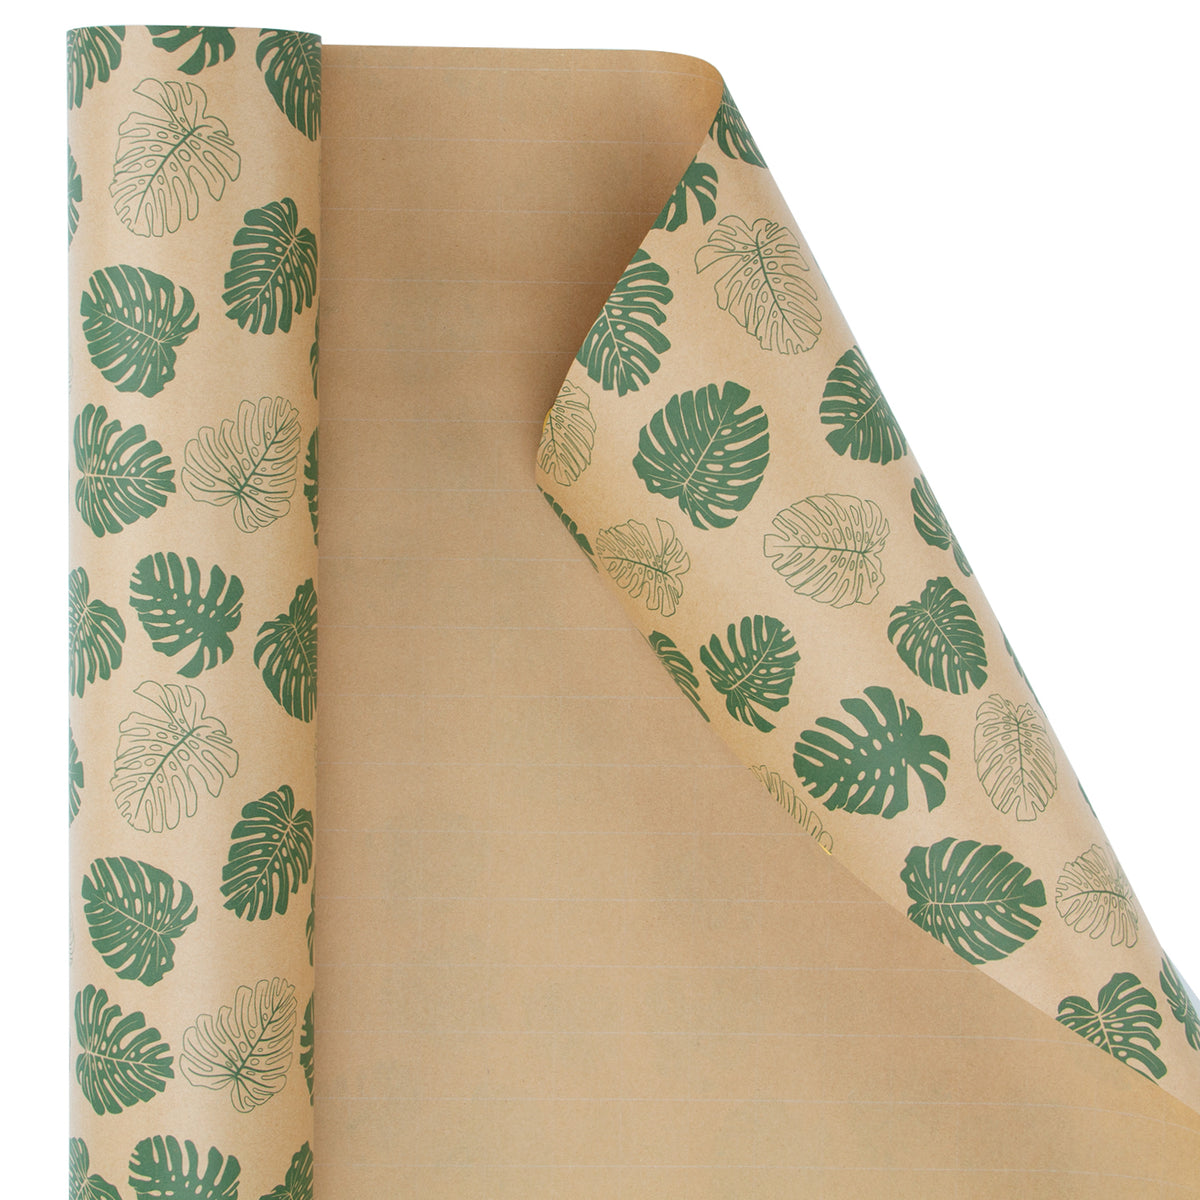 RUSPEPA Kraft Wrapping Paper Sheet -  Watermelon/Banana/Lemon/Cactus/Monstera/Pal